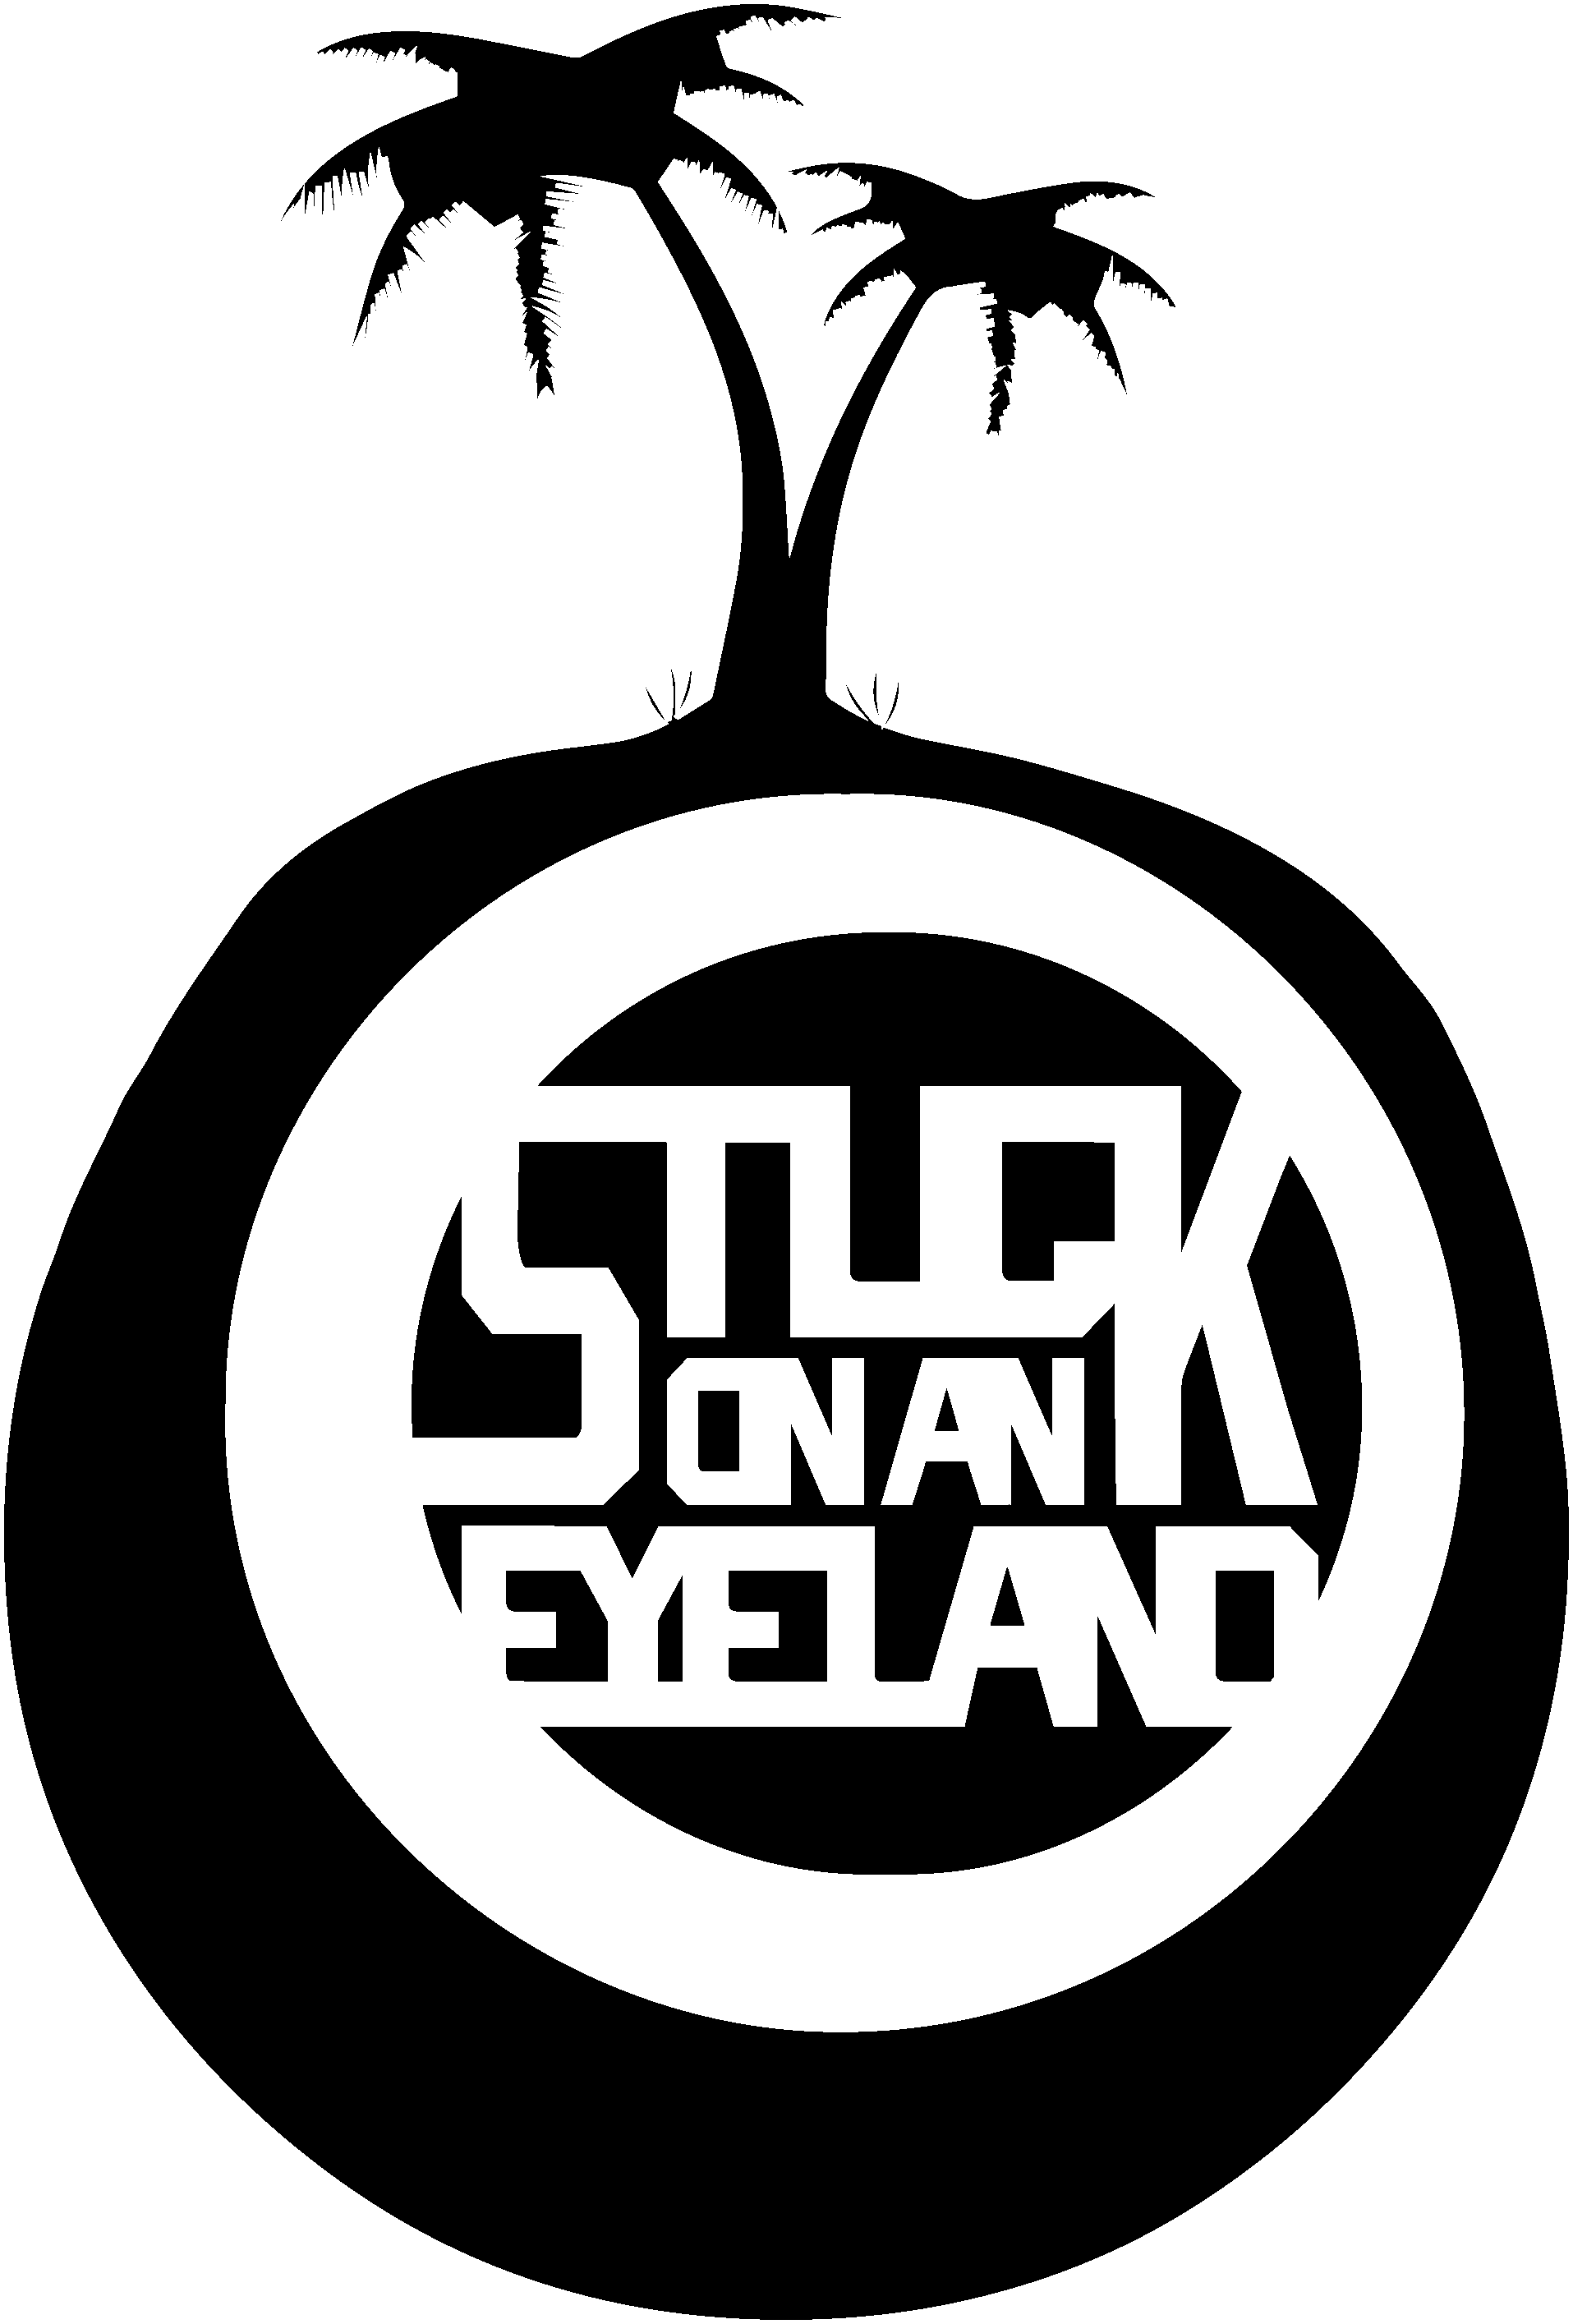 Stuck on an Eyeland